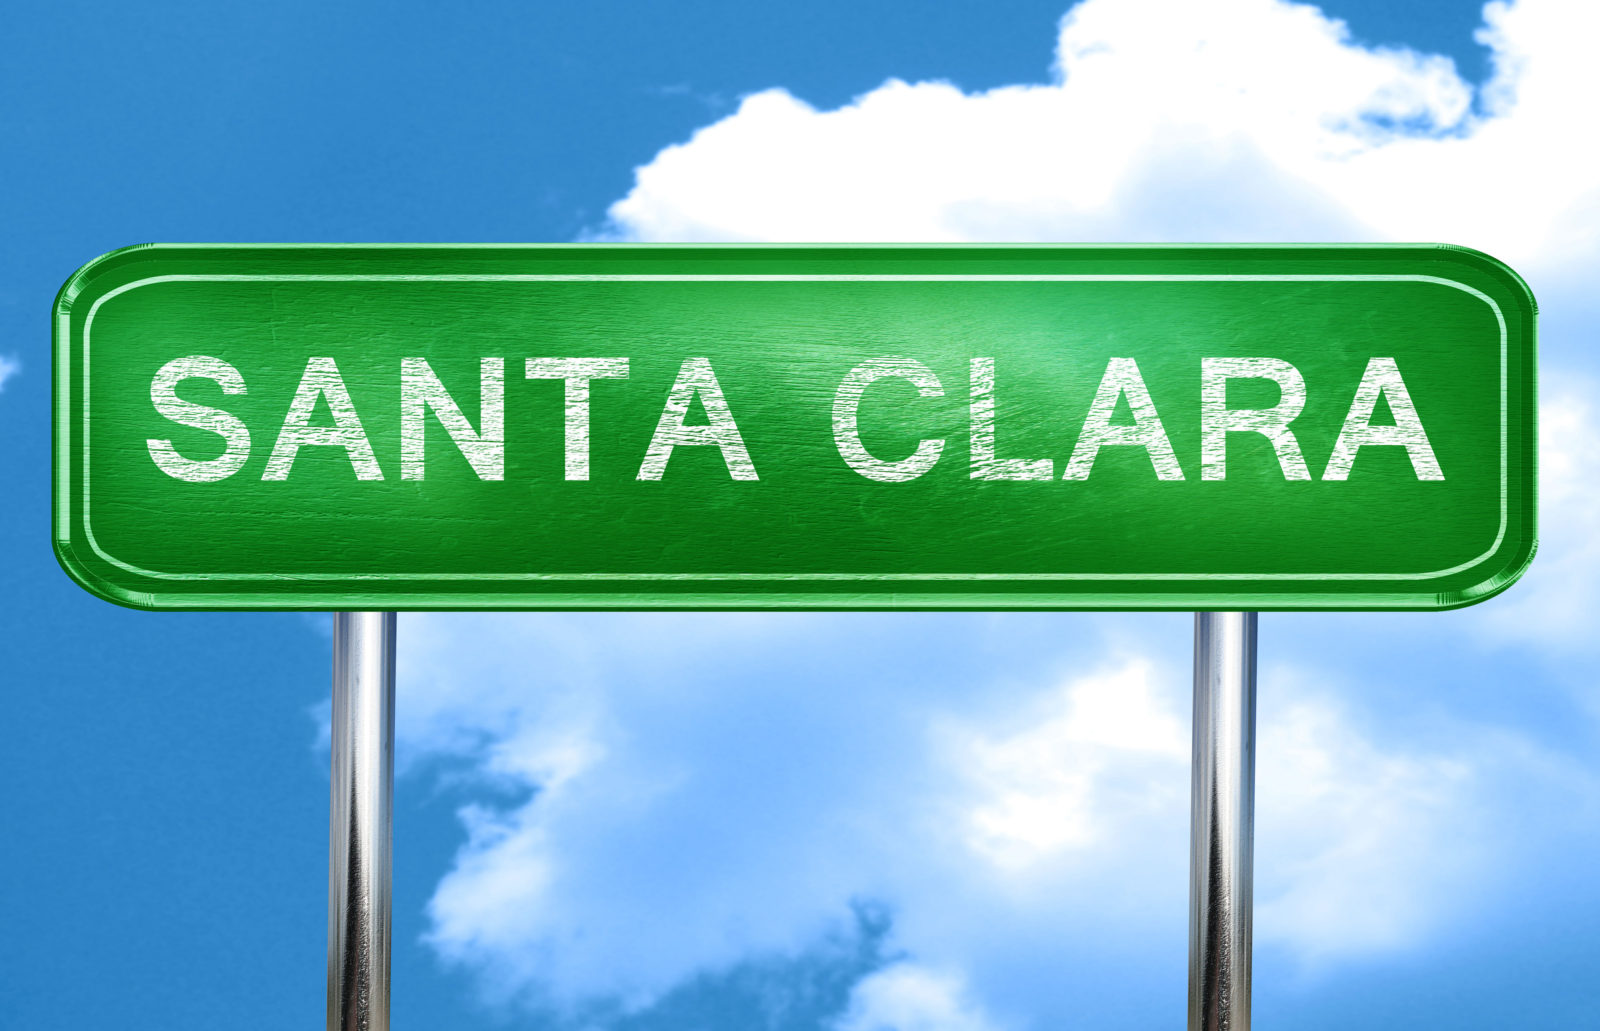 santa clara city, green road sign on a blue background